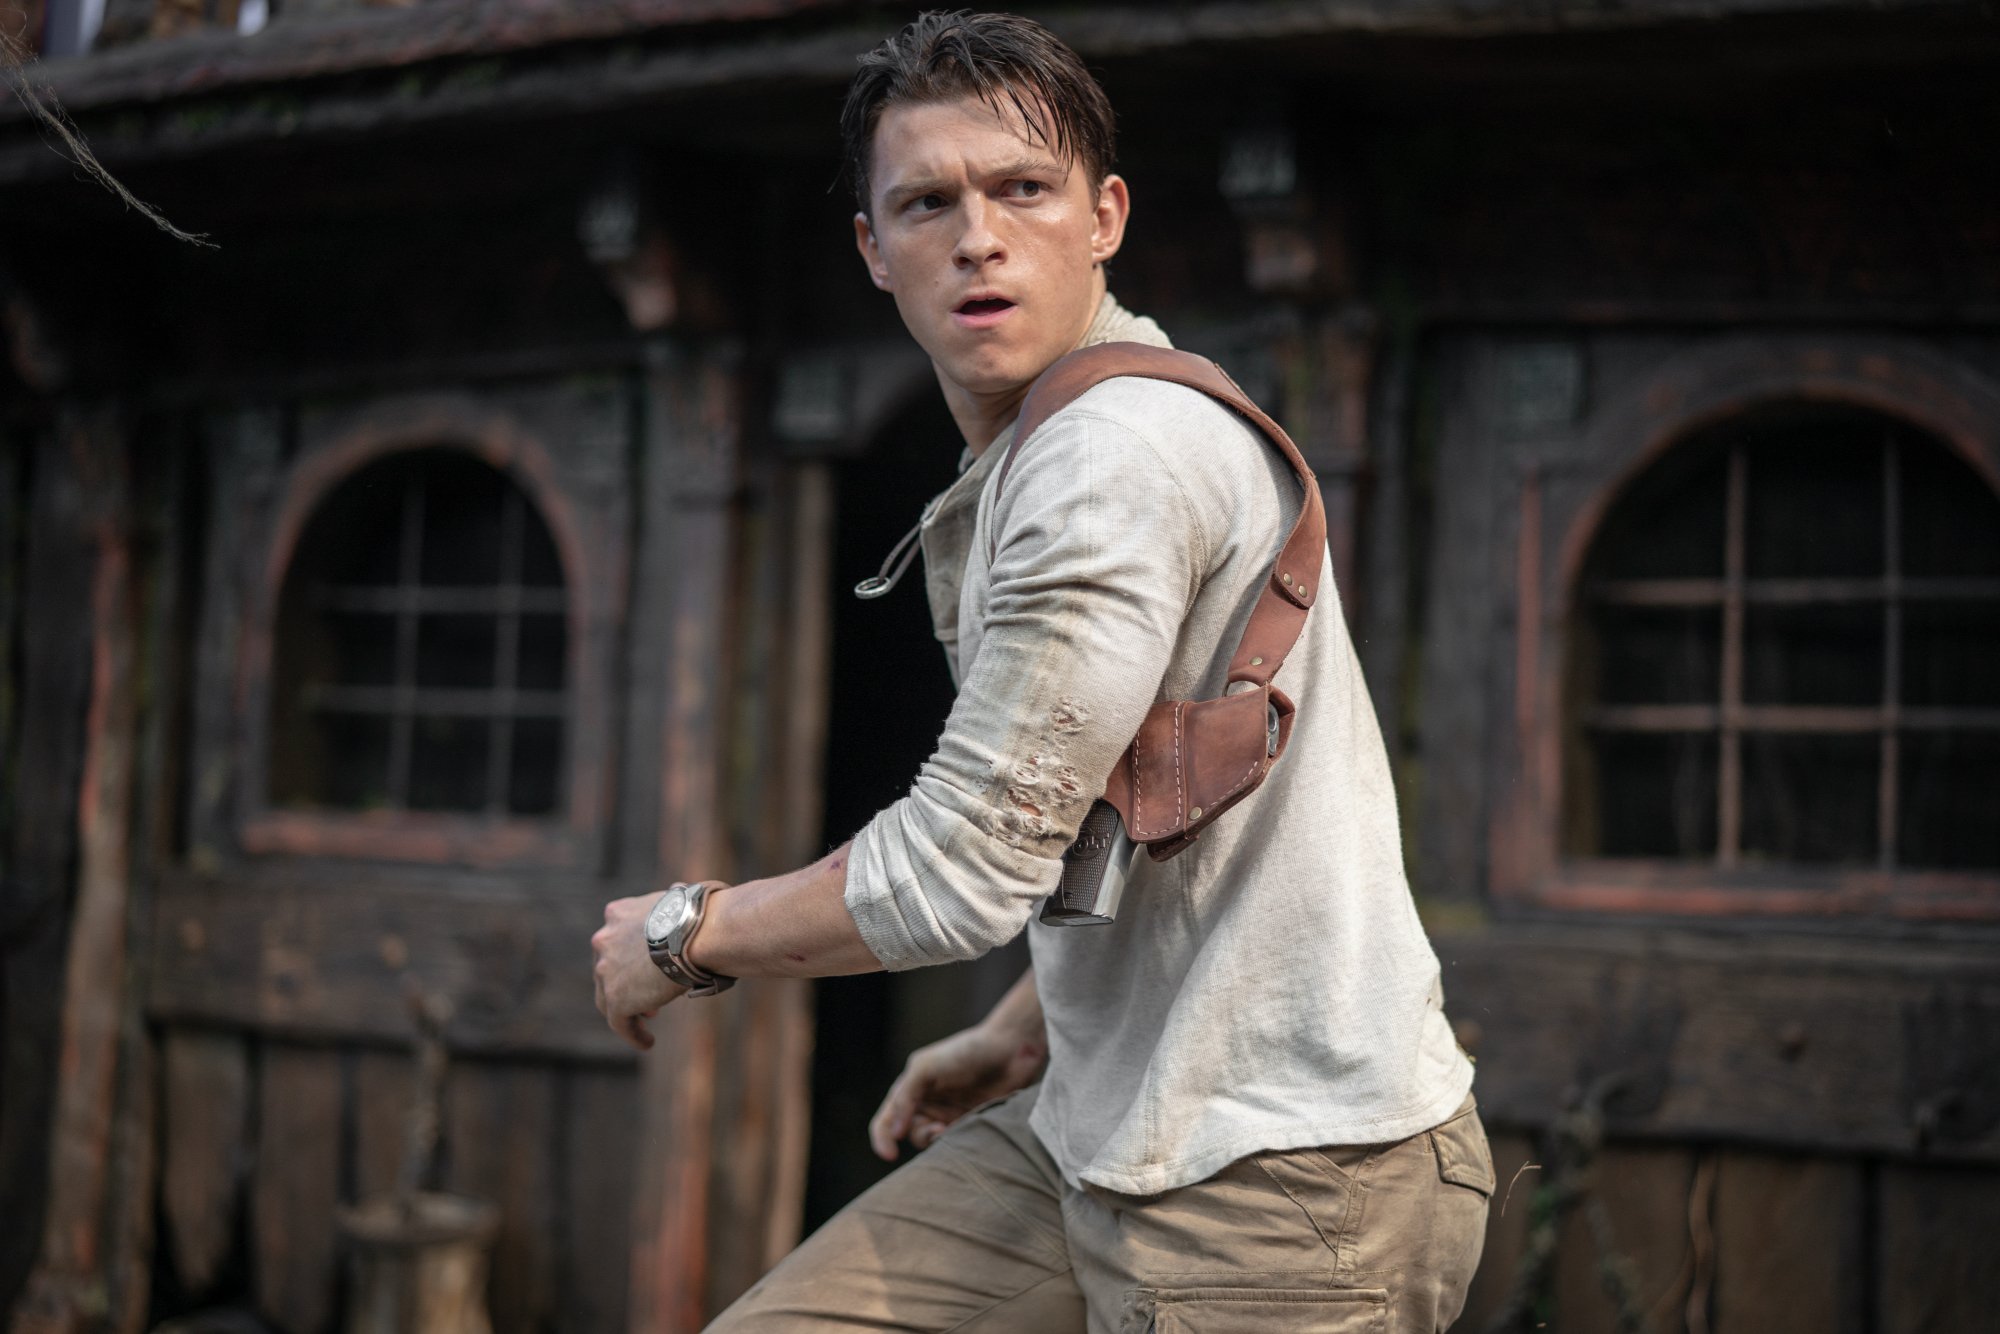 'Uncharted' Tom Holland as Nathan Drake wearing a white shirt and tan pants